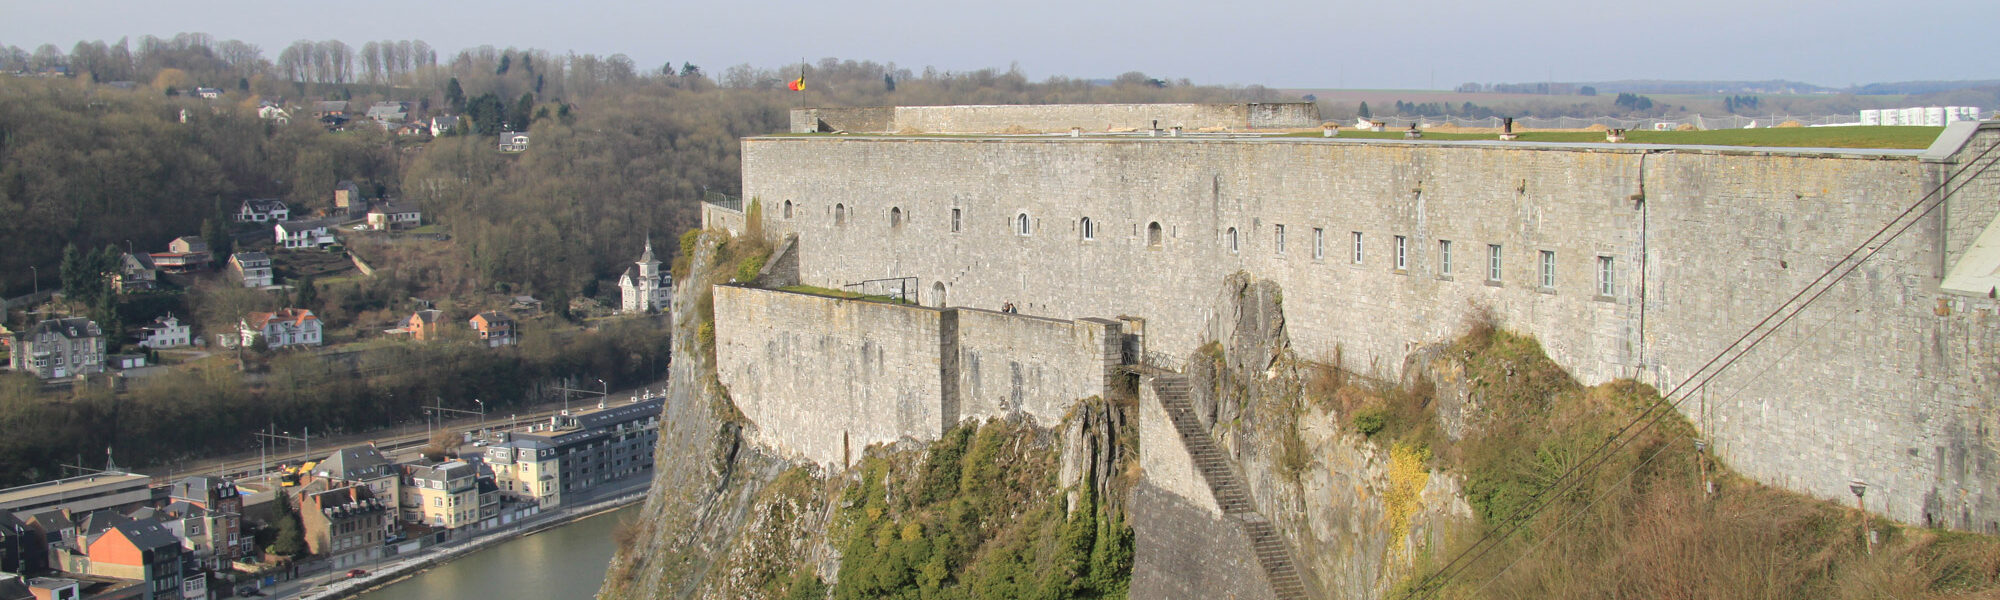 Citadel van Dinant - Dinant - België